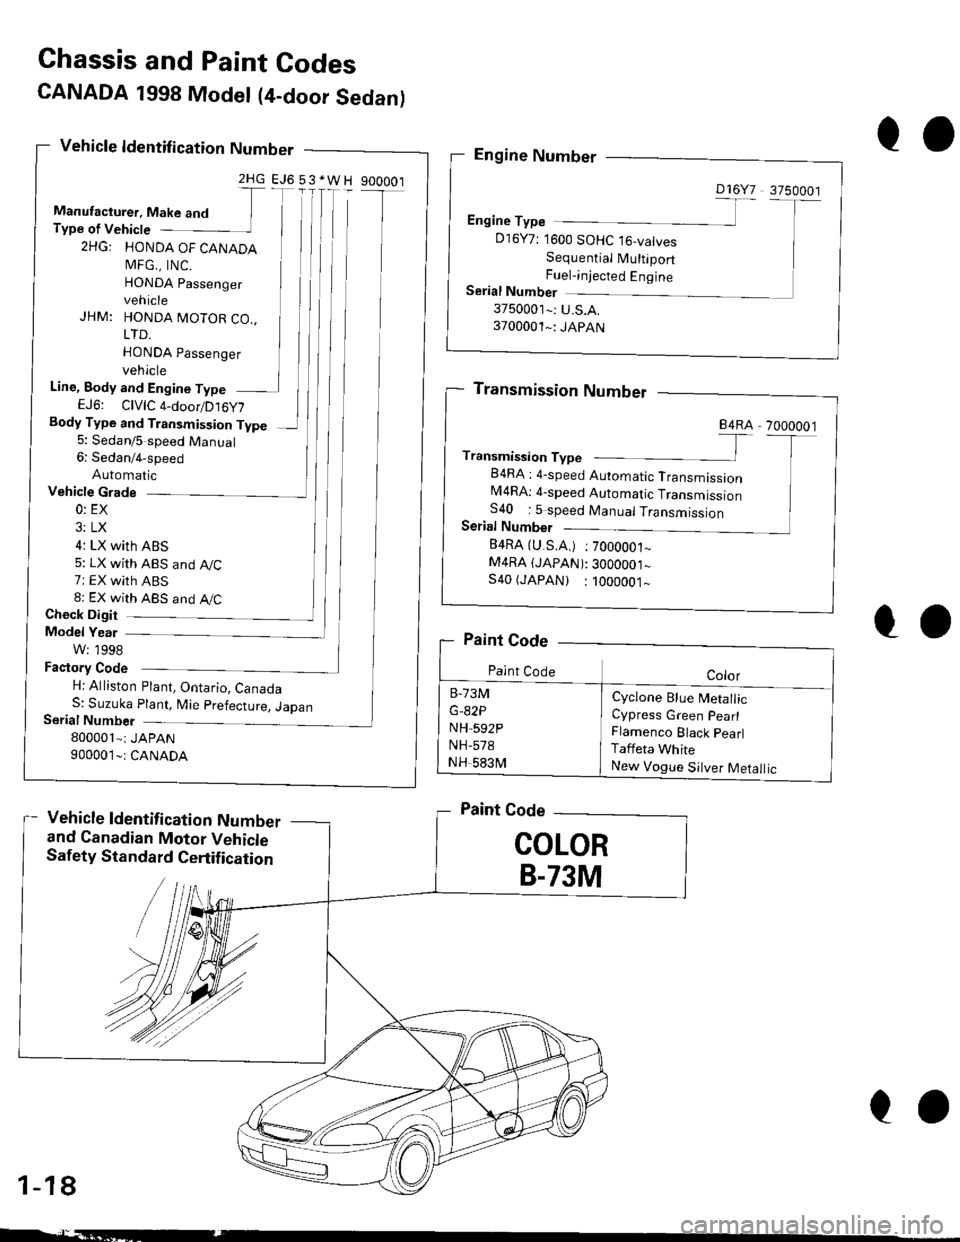 HONDA CIVIC 1997 6.G Workshop Manual CANADA 1998 Model (4-door Sedanl
Vehicle ldentification Number
Chassis and Paint Codes
2HG.I
Manufacturer, Make andType of Vehicte I2HG: HONDA OF CANADA ]MFG,, INC.
HONDA passenger lvehicle
JHM: HONDA